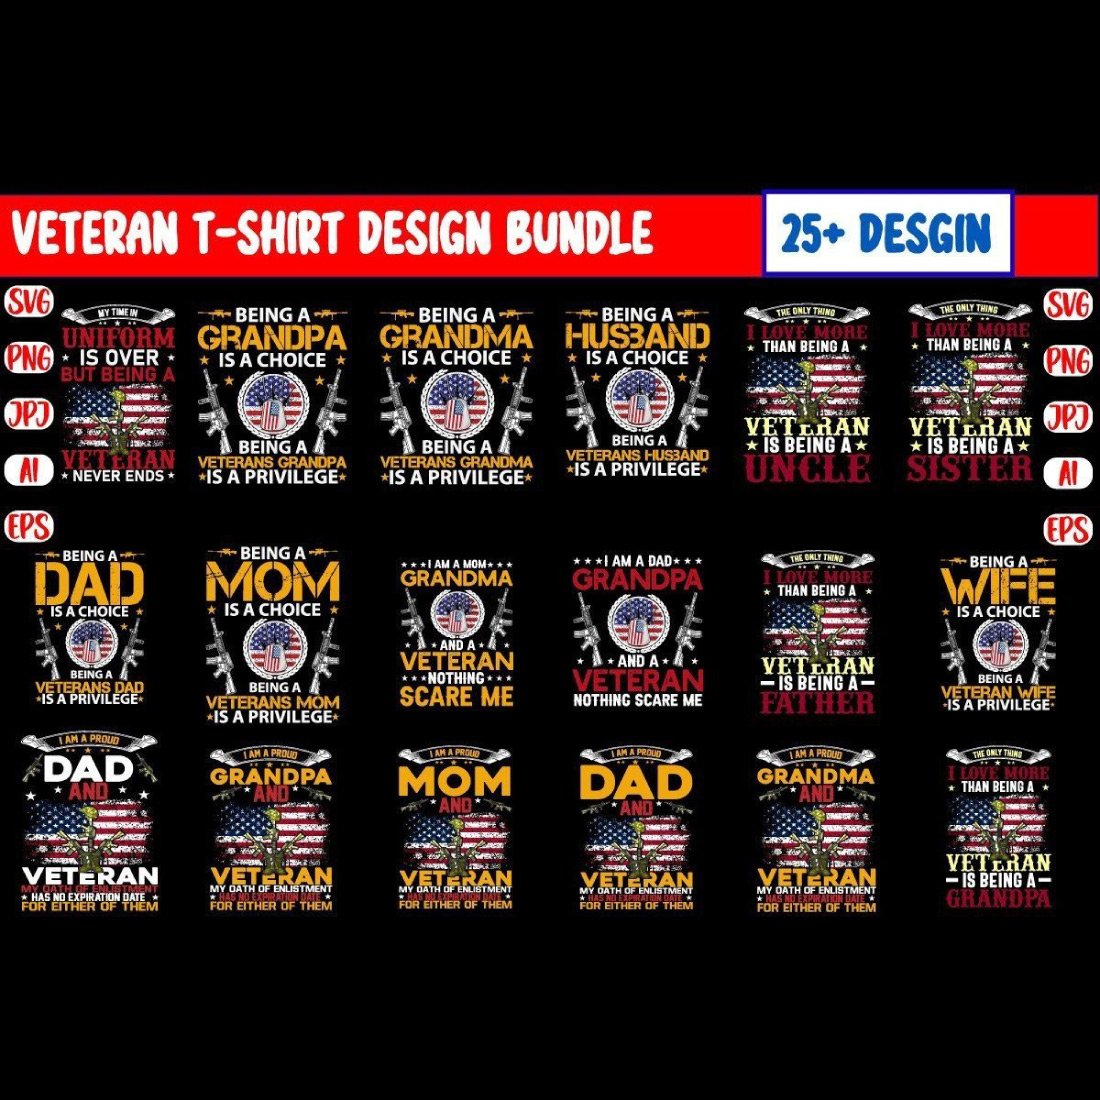 Veteran T-Shirt Design Bundle us army veterans t-shirt design preview image.